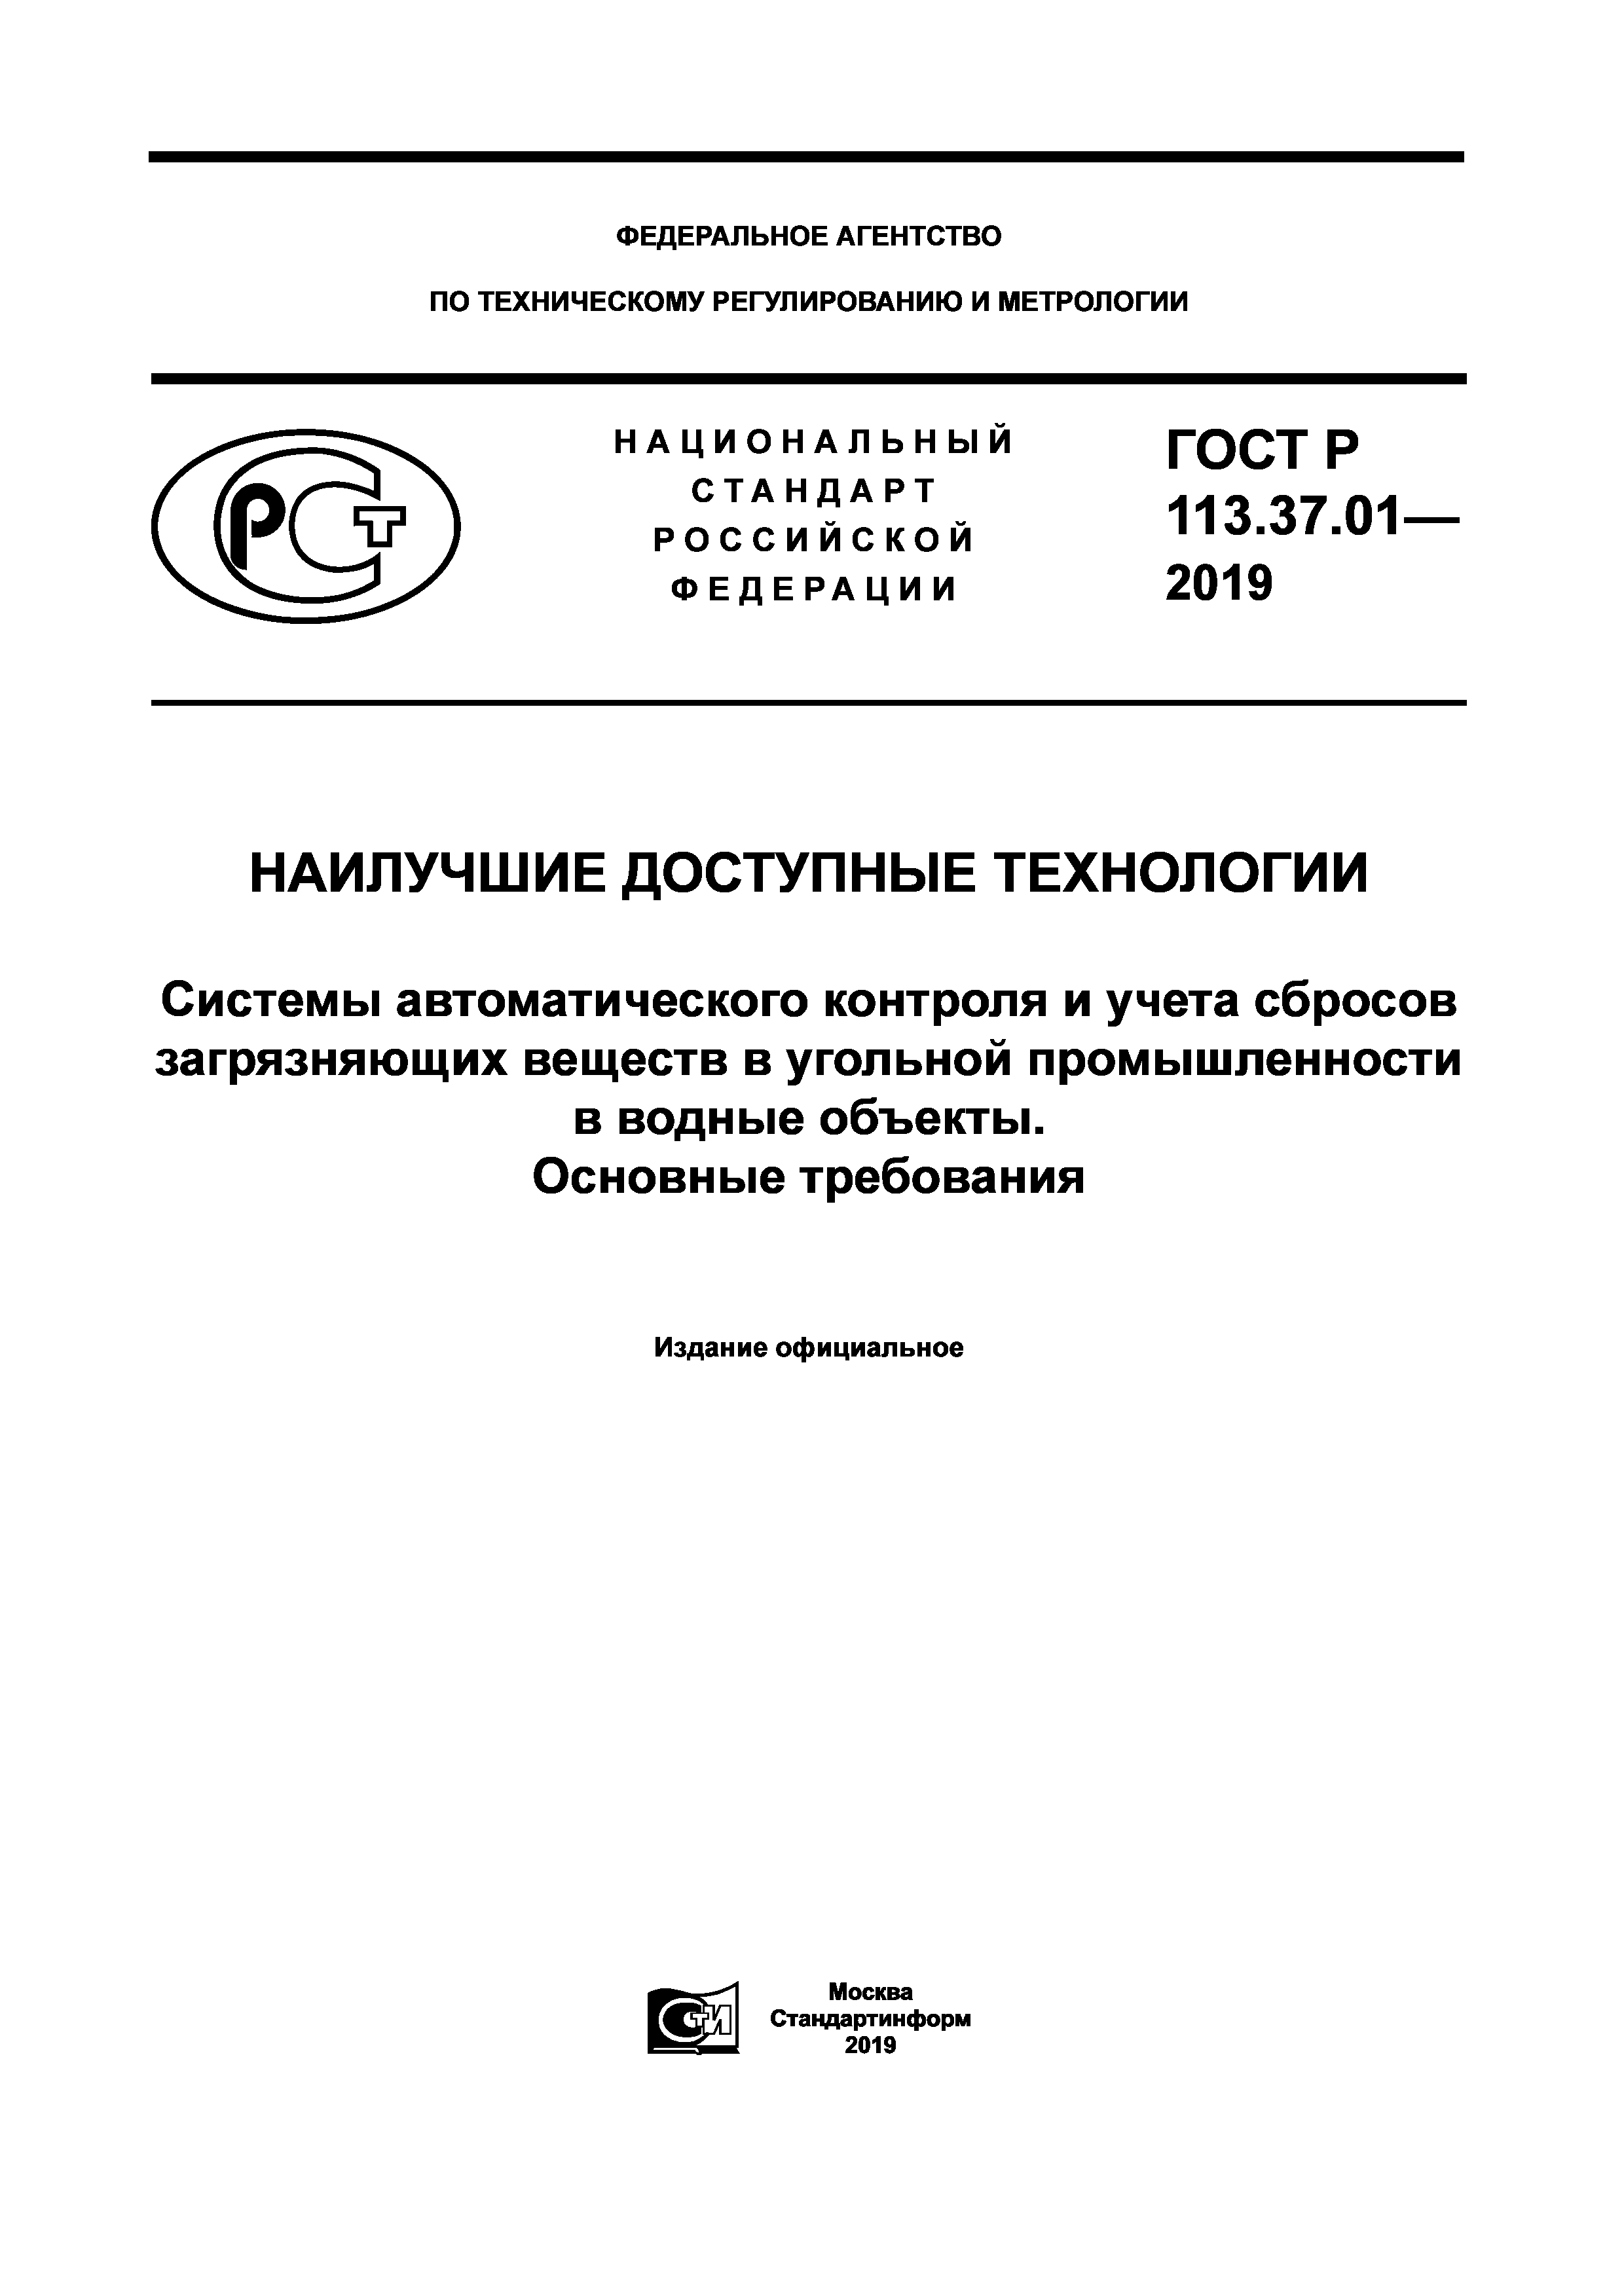 ГОСТ Р 113.37.01-2019